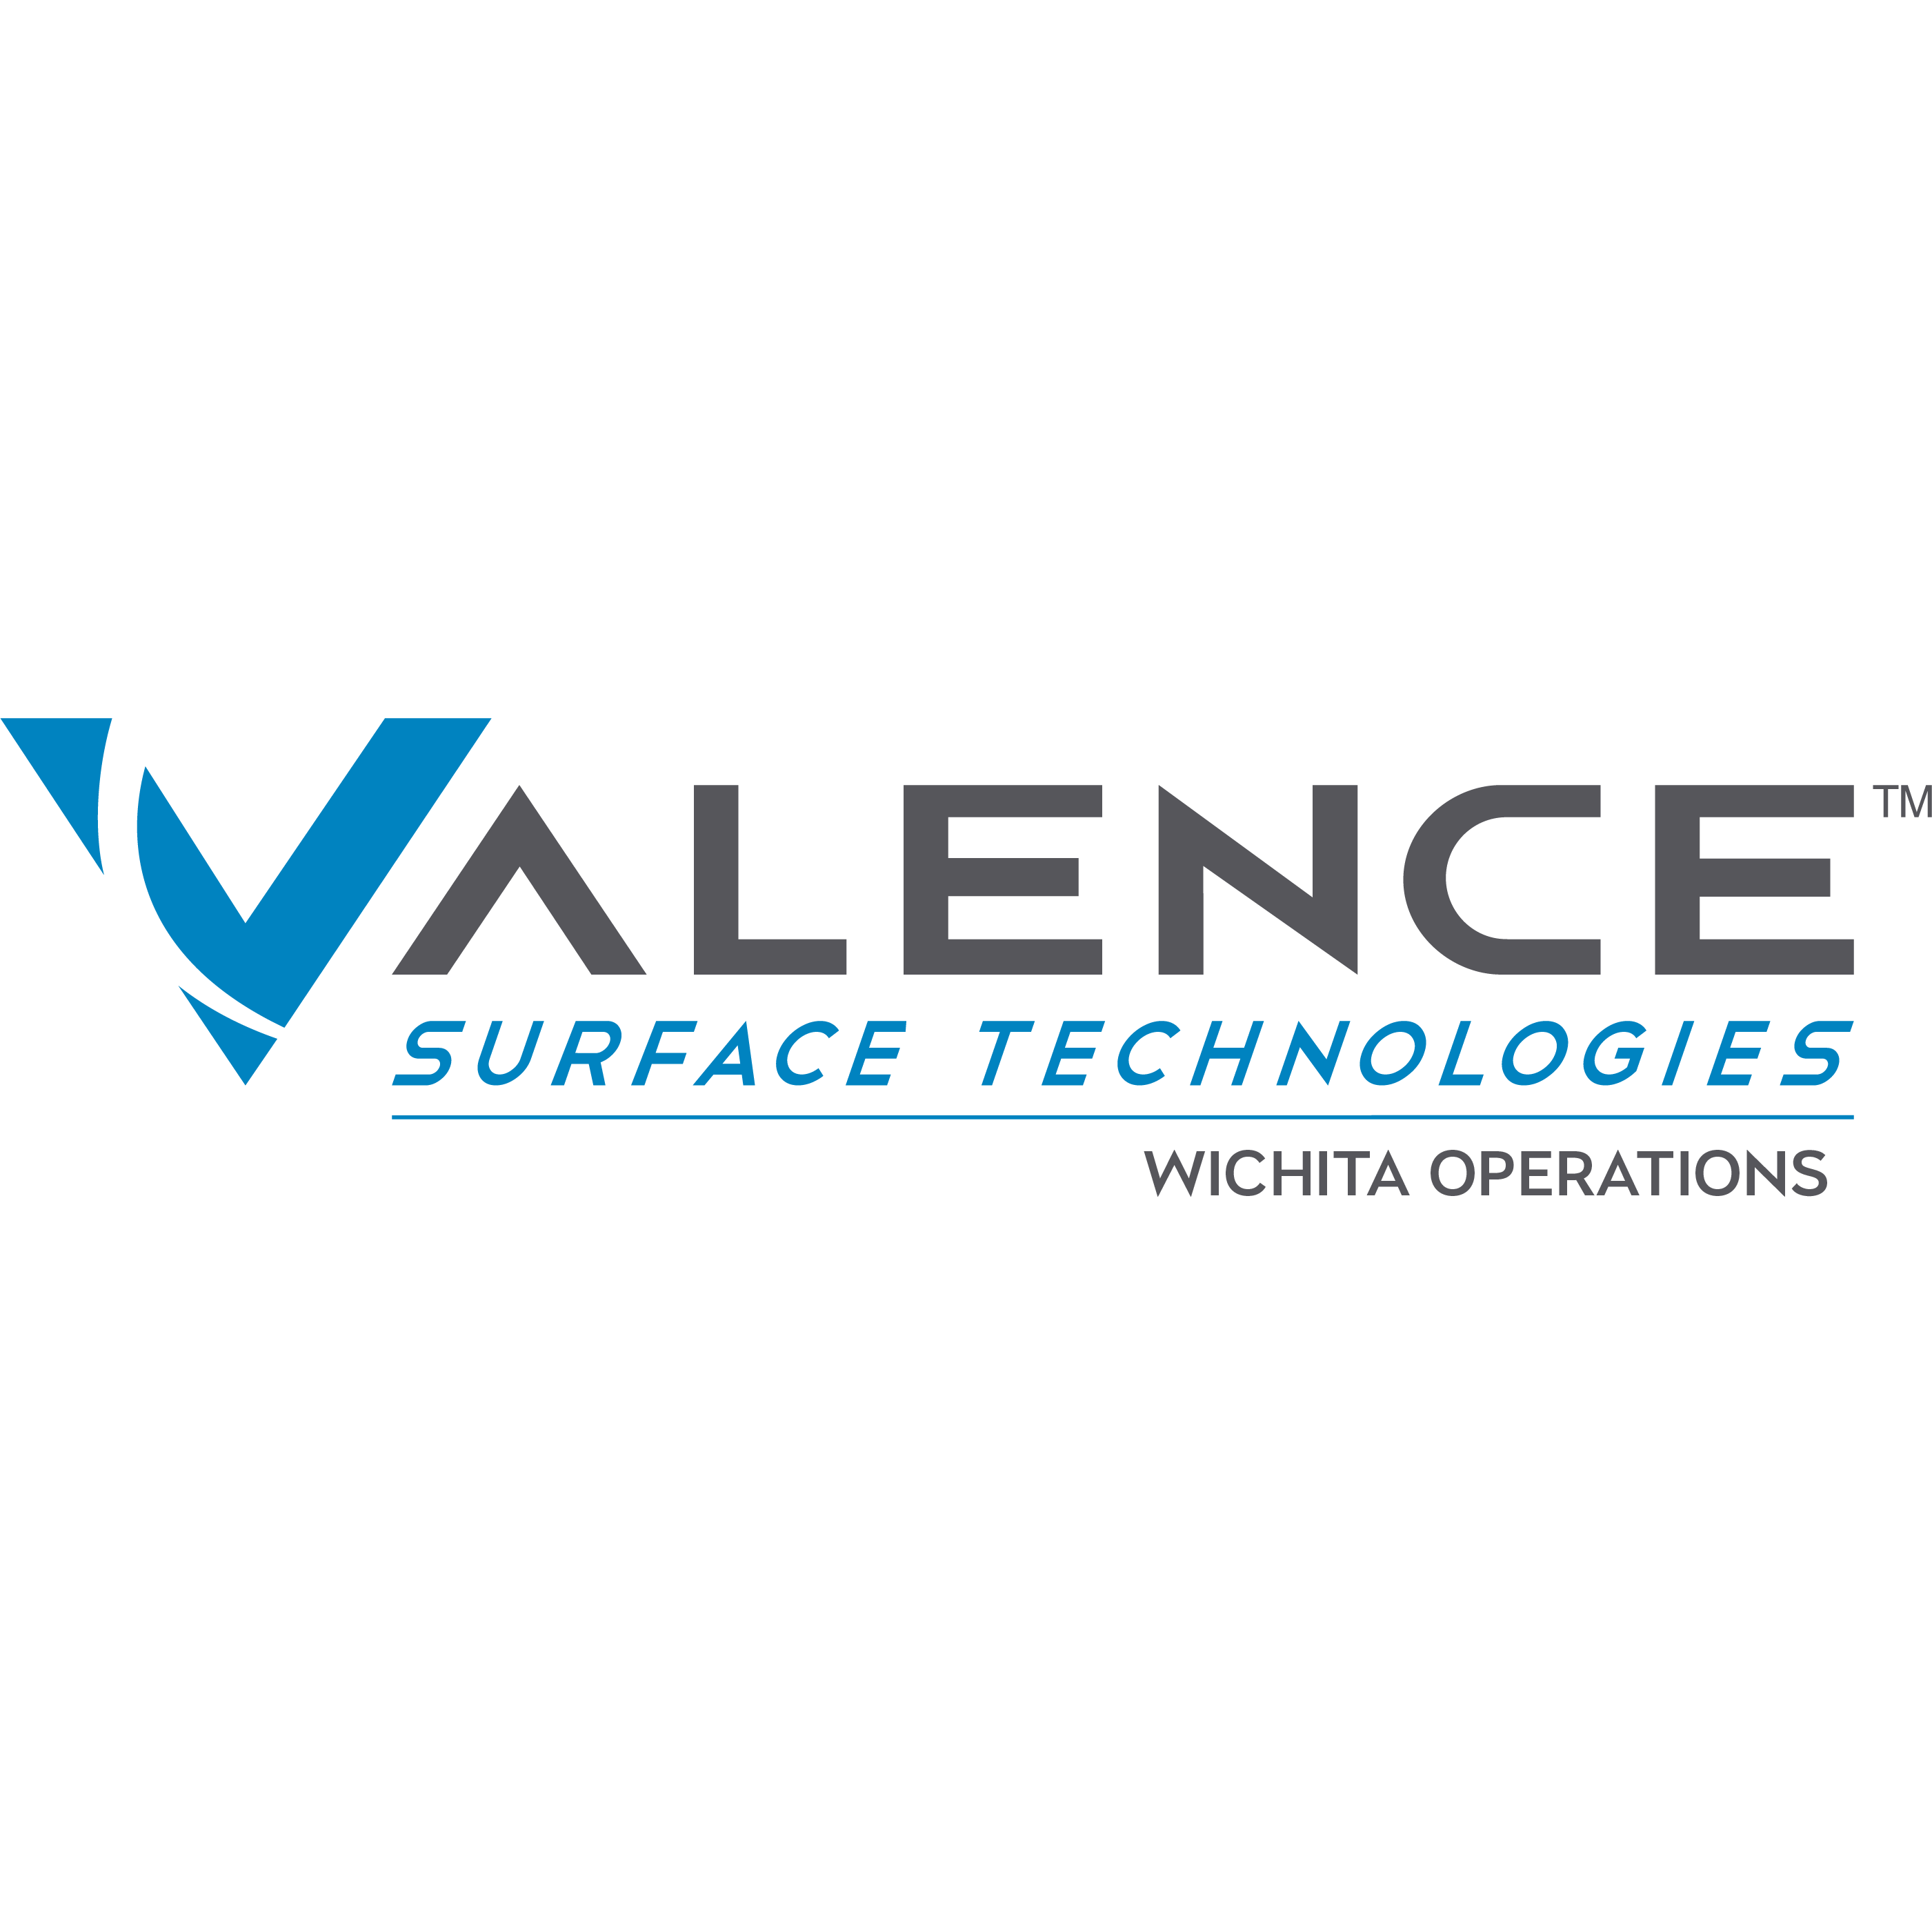 Valence Surface Technologies